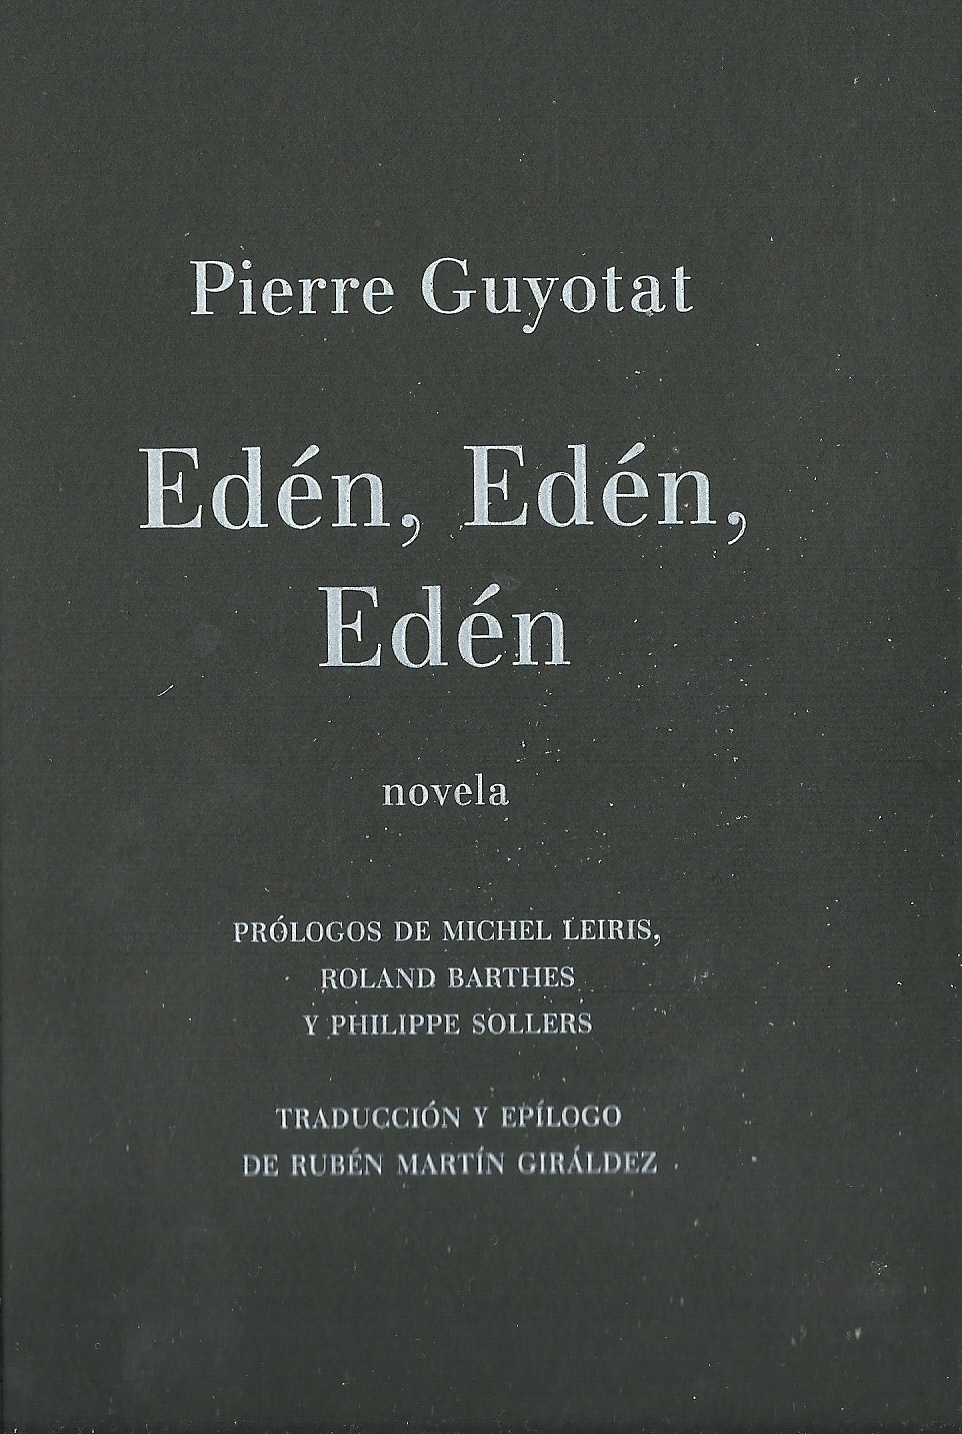 Pierre Guyotat | Edén, Edén, Edén